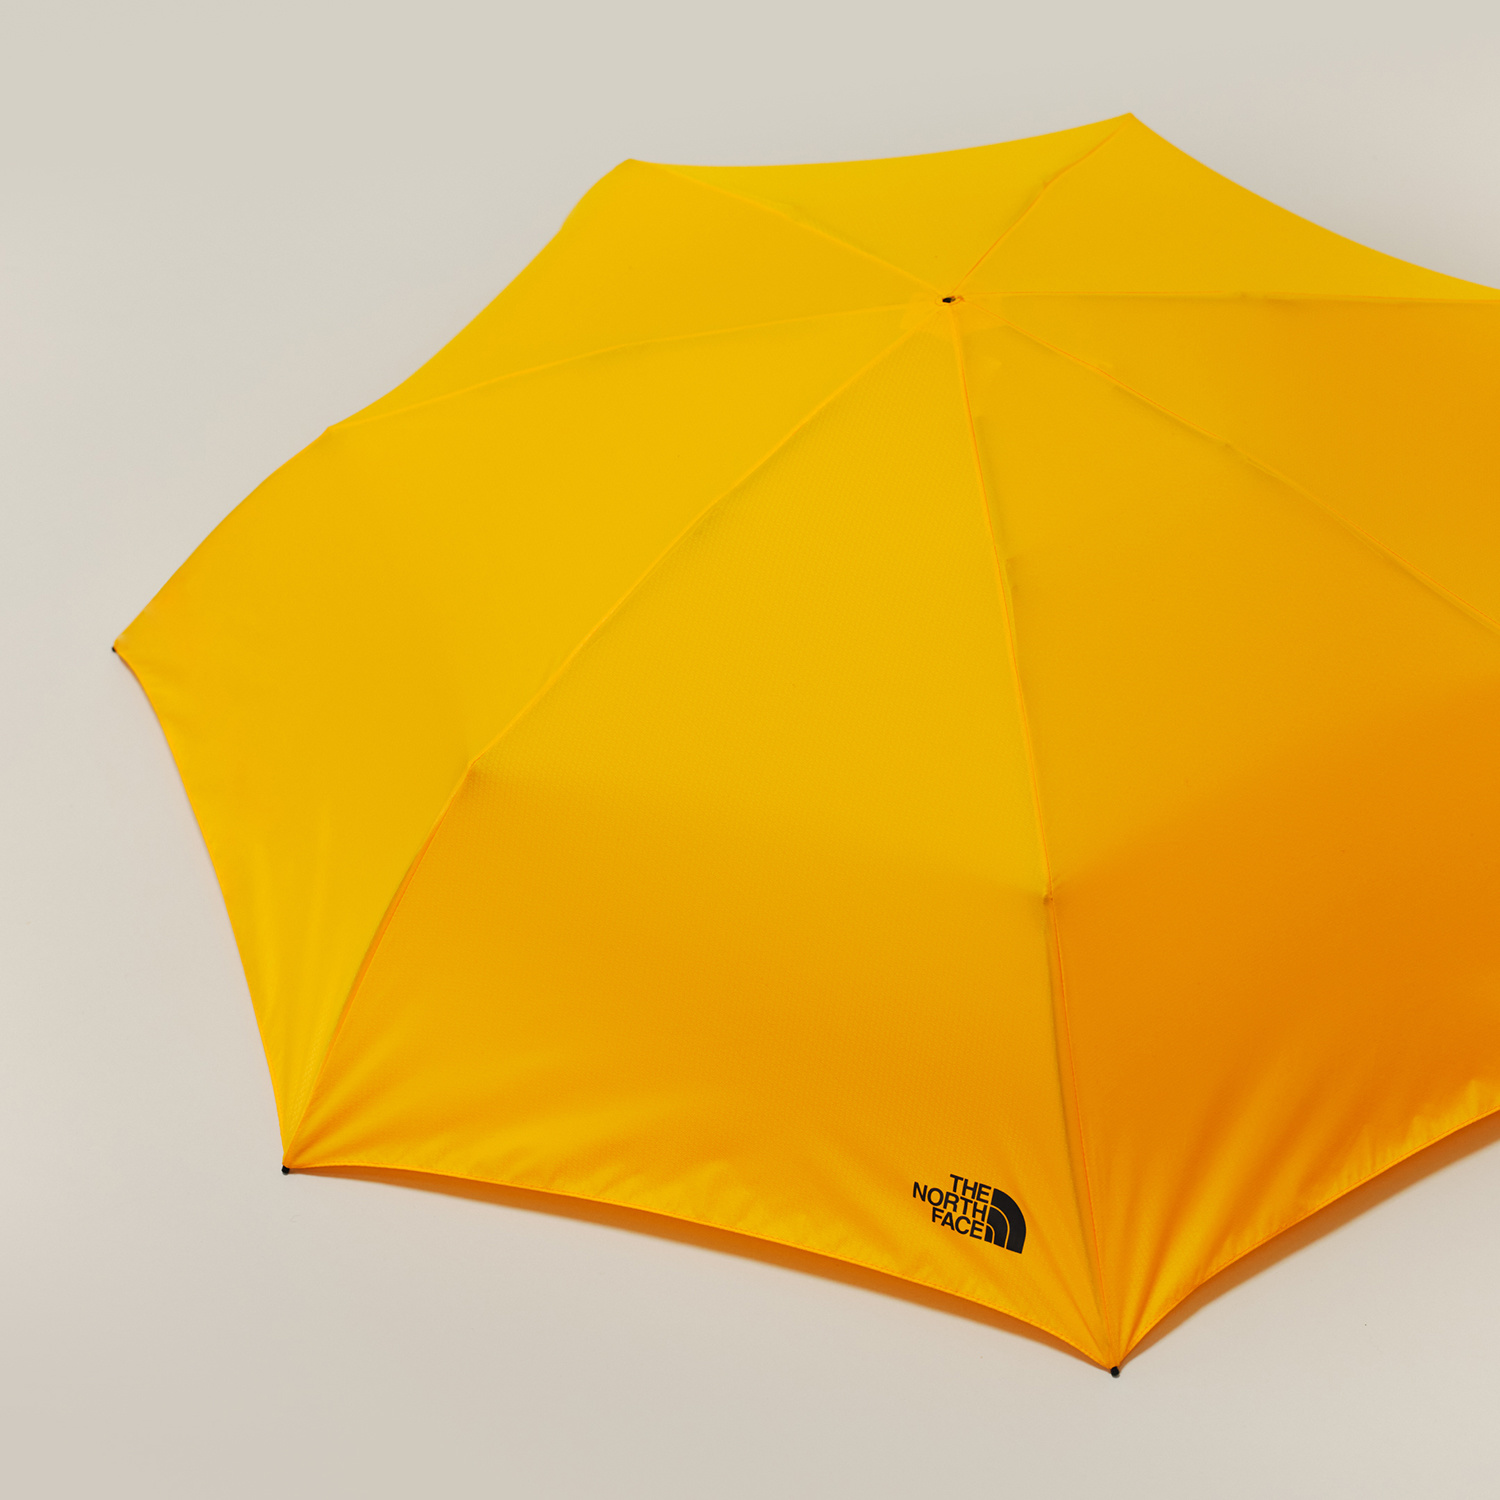 THE NORTH FACE 发布品牌首款折叠伞Module Umbrella